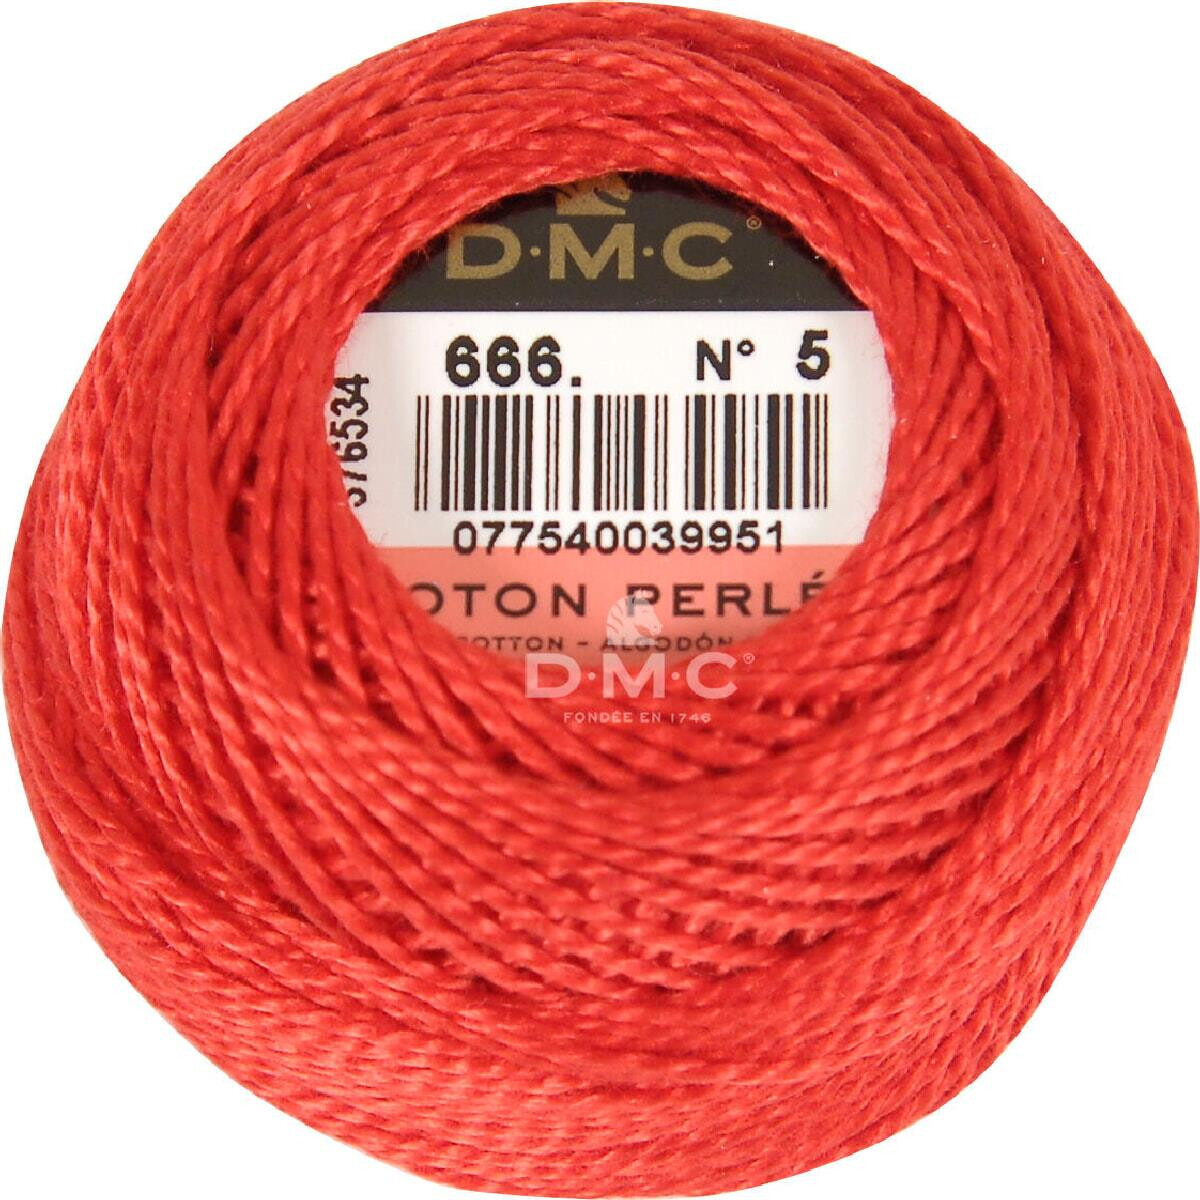 DMC Pearl Cotton on a ball Size 5, 10g, 116A/5-666